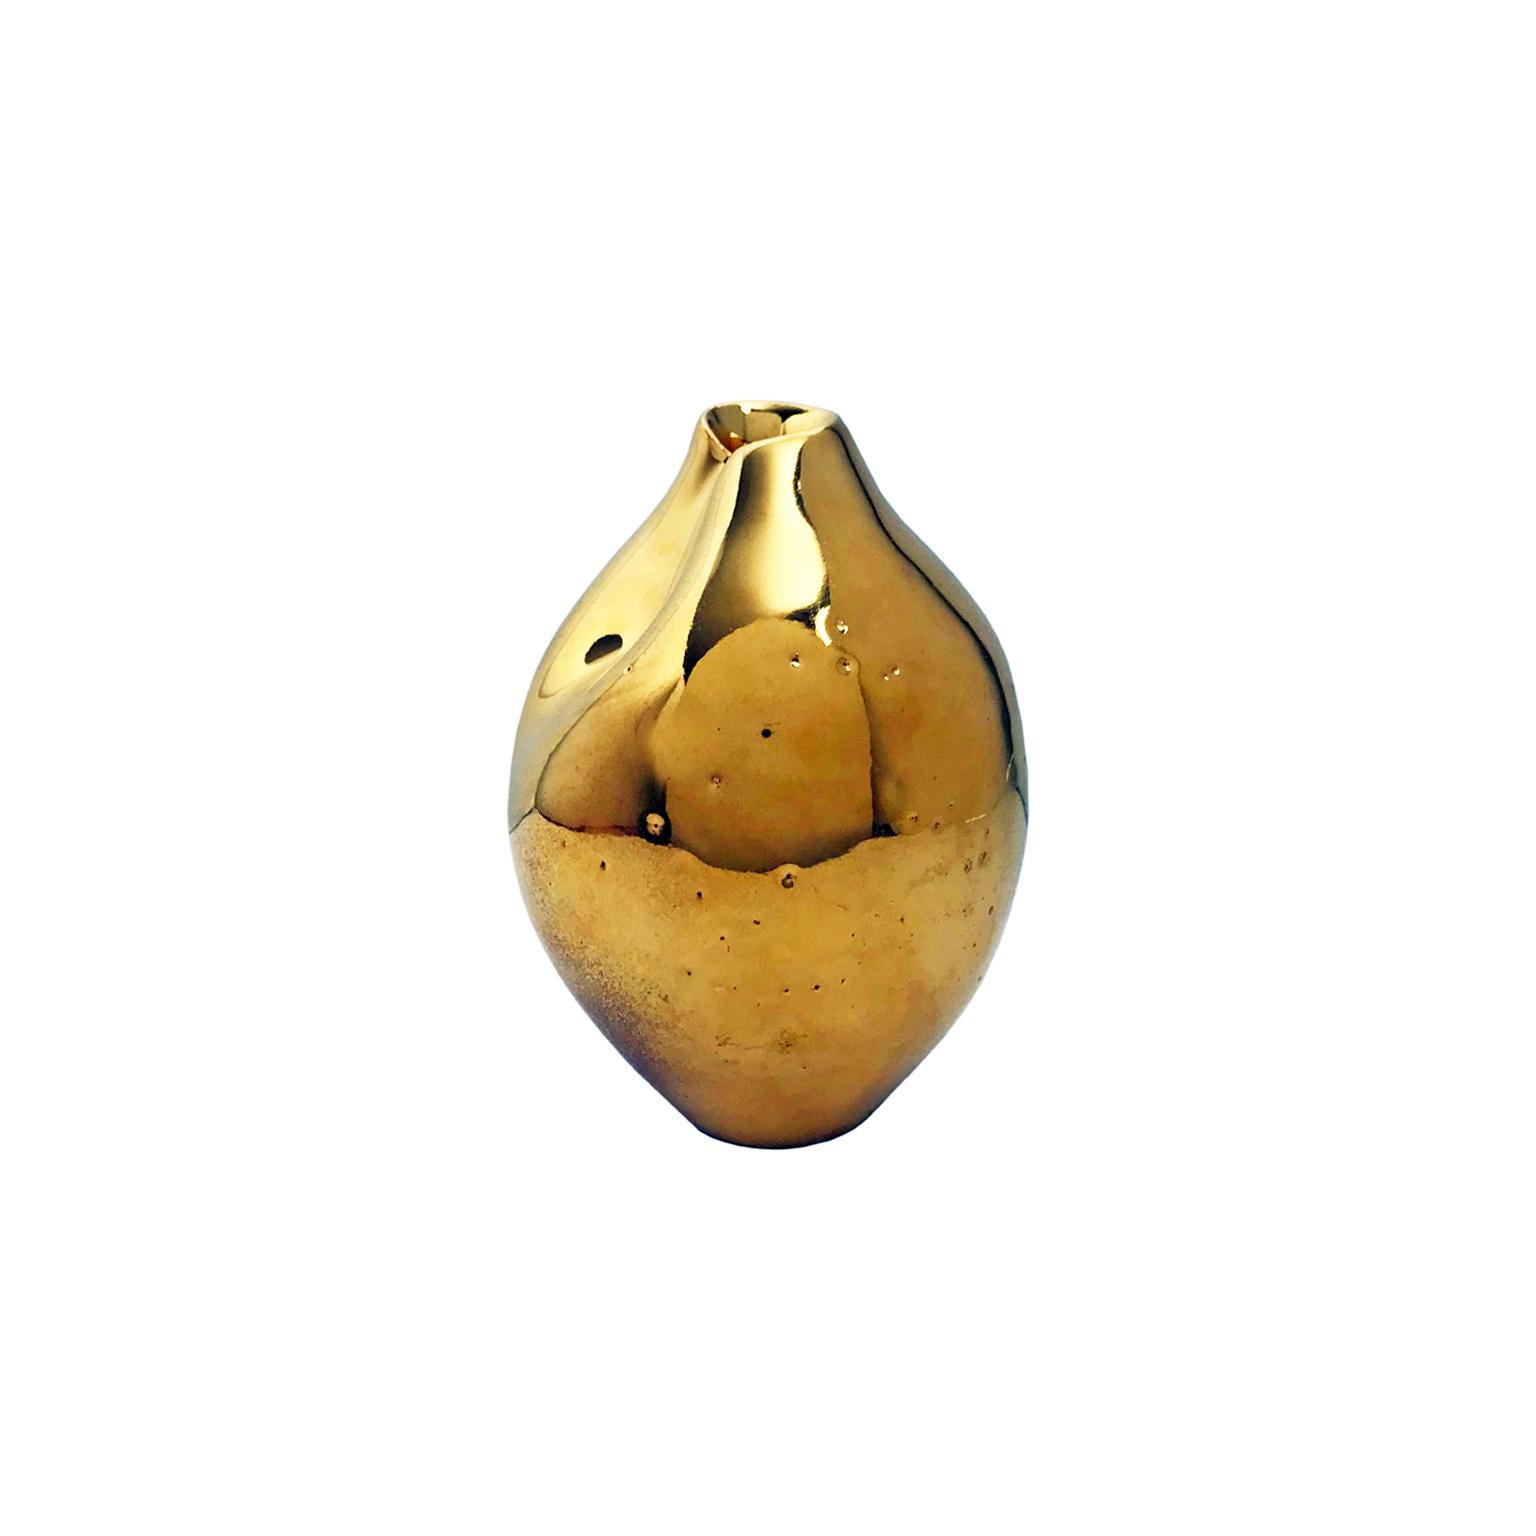 Small 22-Karat Gold Lustre Glaze Ceramic Vase #5 with Double Dent, Sandi Fellman